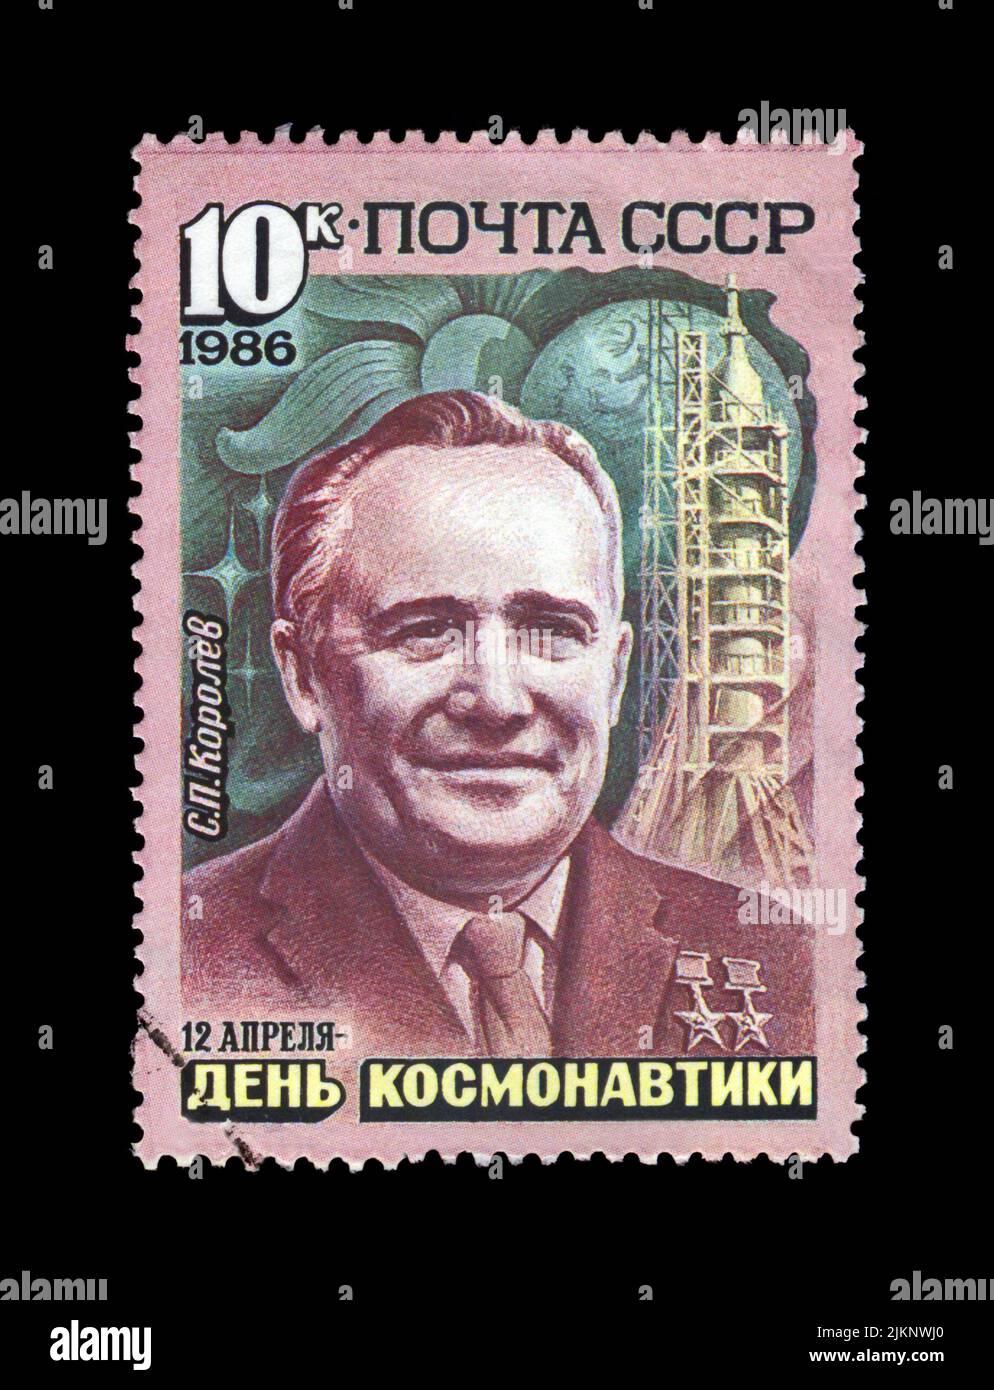 Sergei Korolev (1906-1966), rocket scientist, and Vostok spaceship, circa 1986. National Cosmonauts Day. vintage postal stamp on black background. Stock Photo